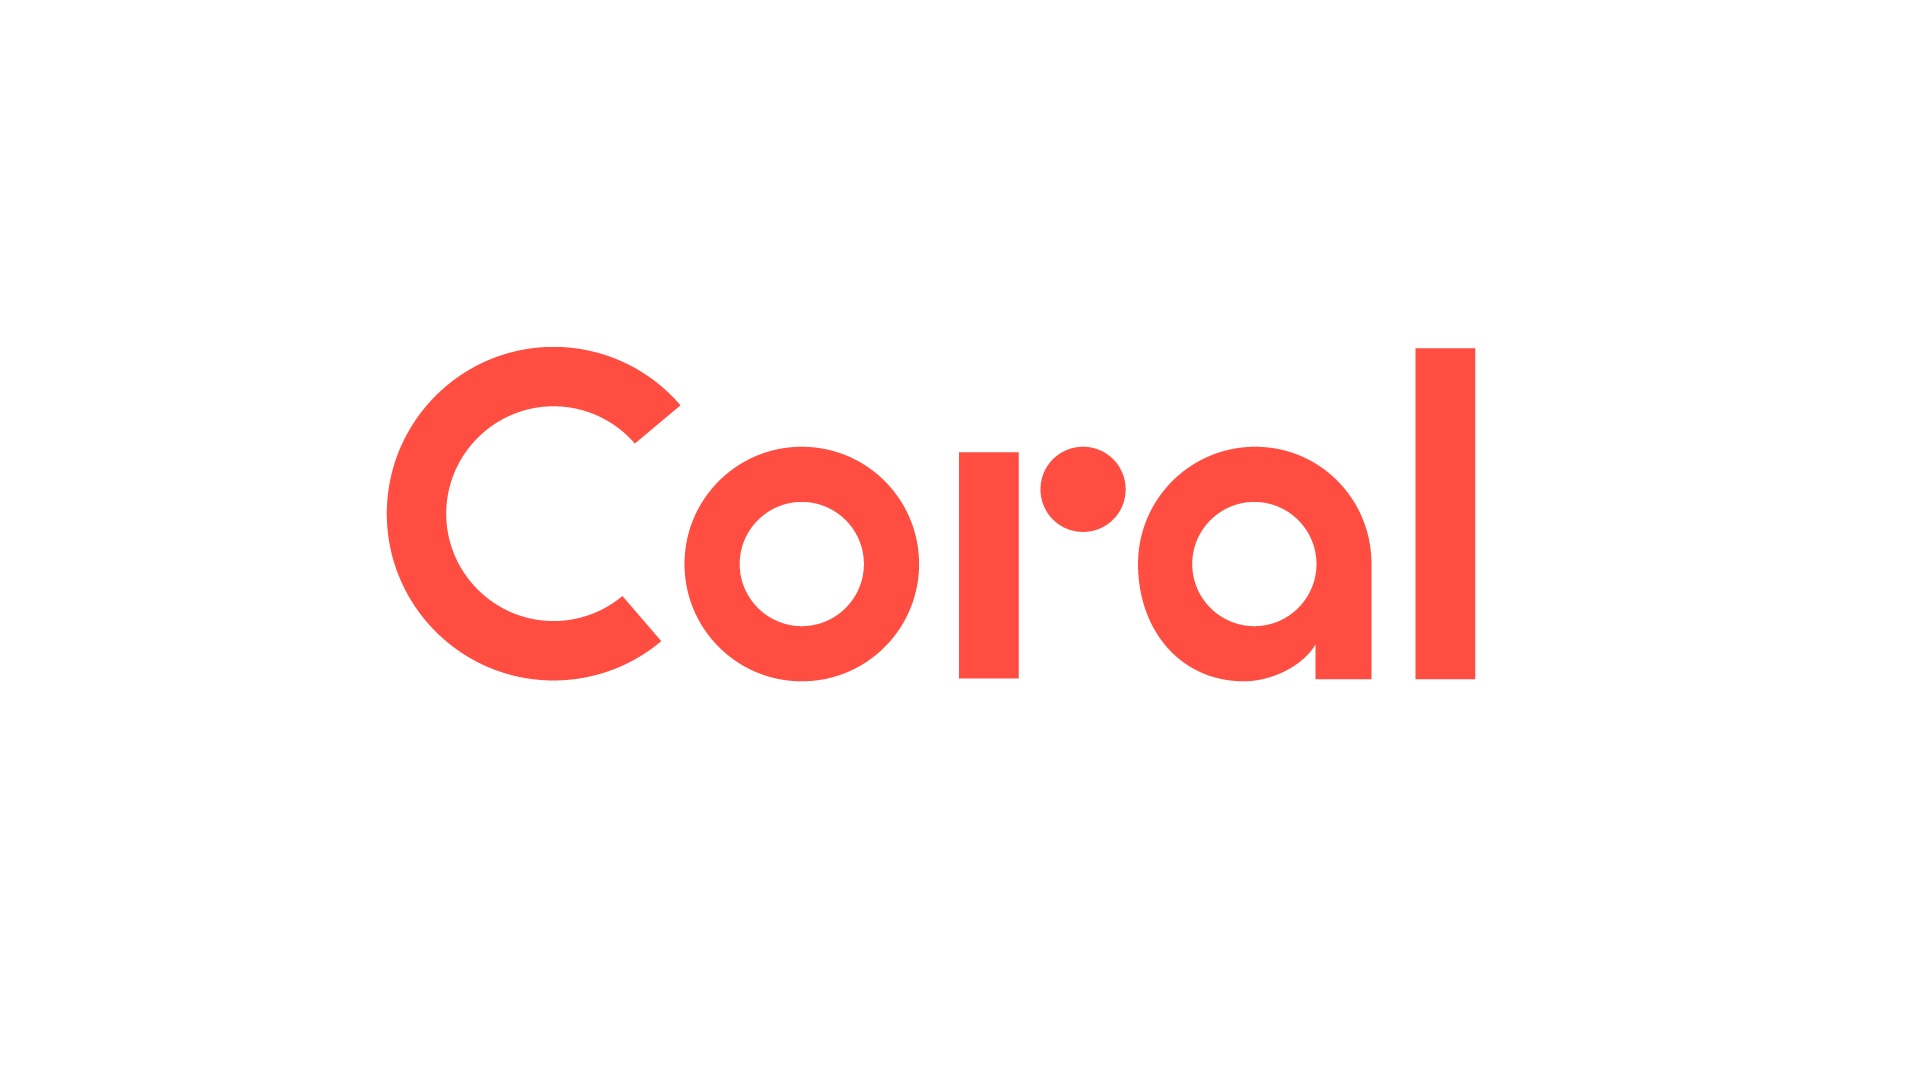 Coral Travel логотип. Логотип фирмы Coral. Корал логотип туроператор. Corall логотип вектор.